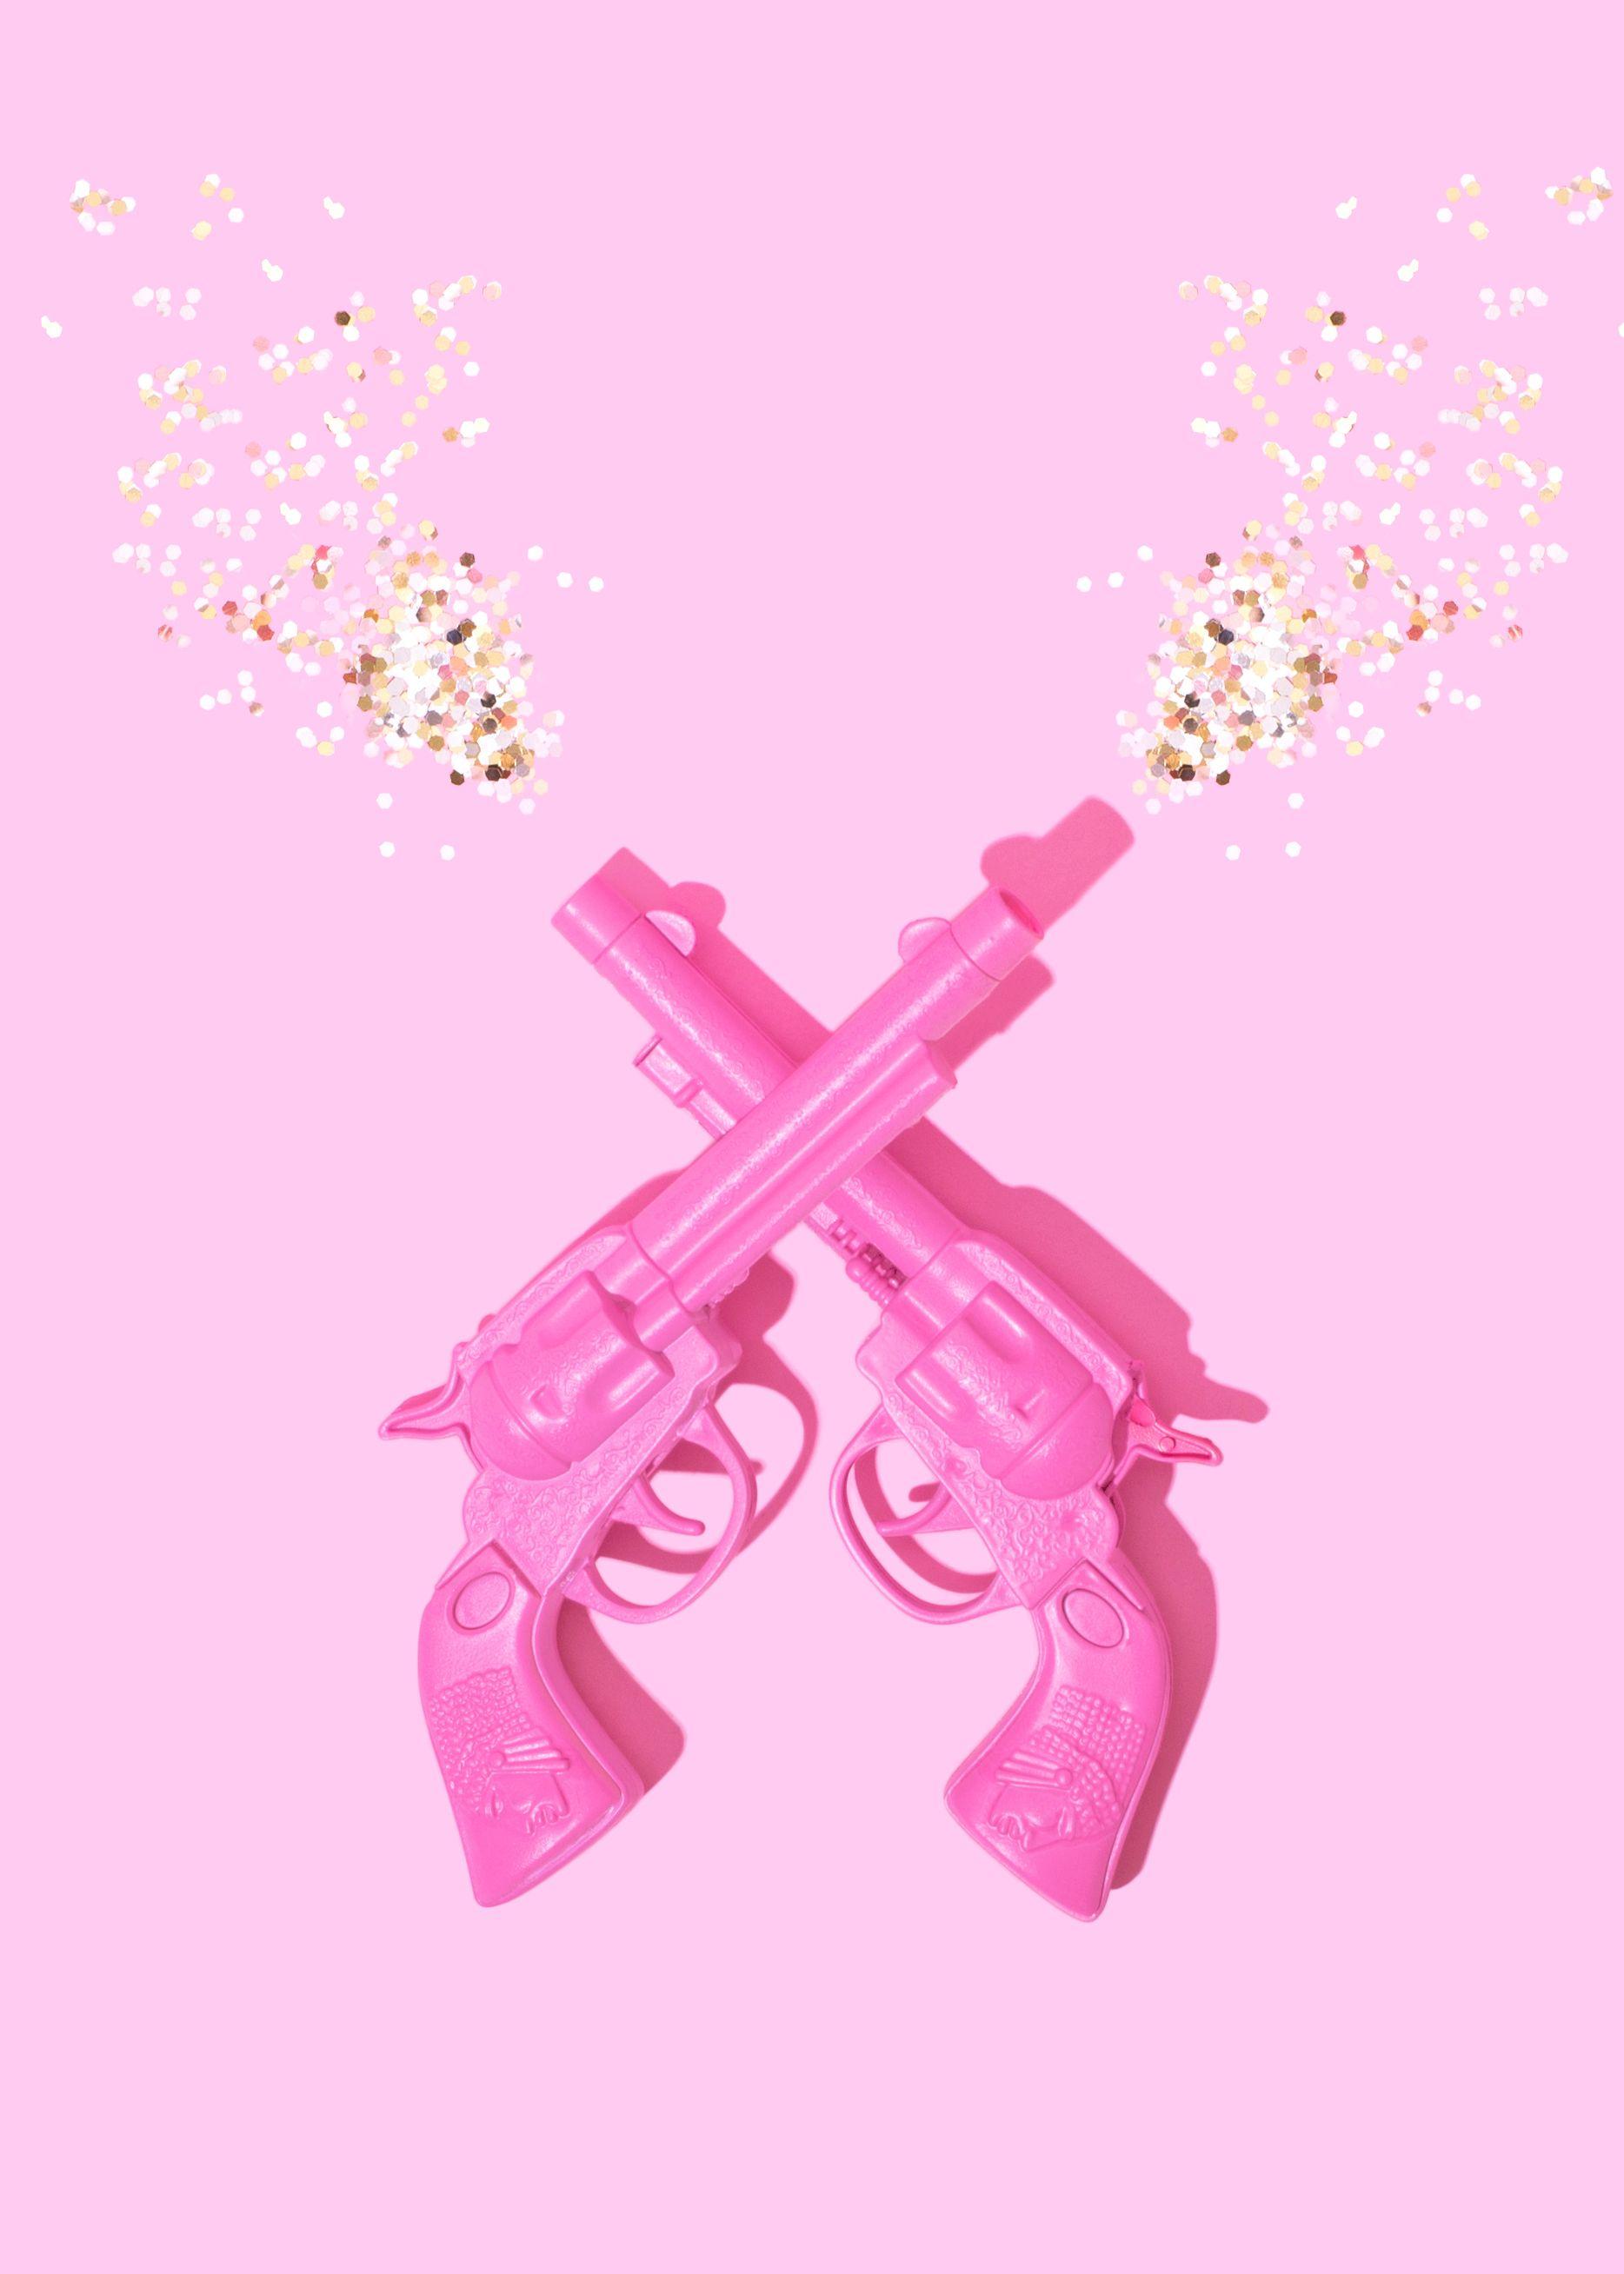 Confetti Pistols // Violet Tinder Studios. Pink aesthetic